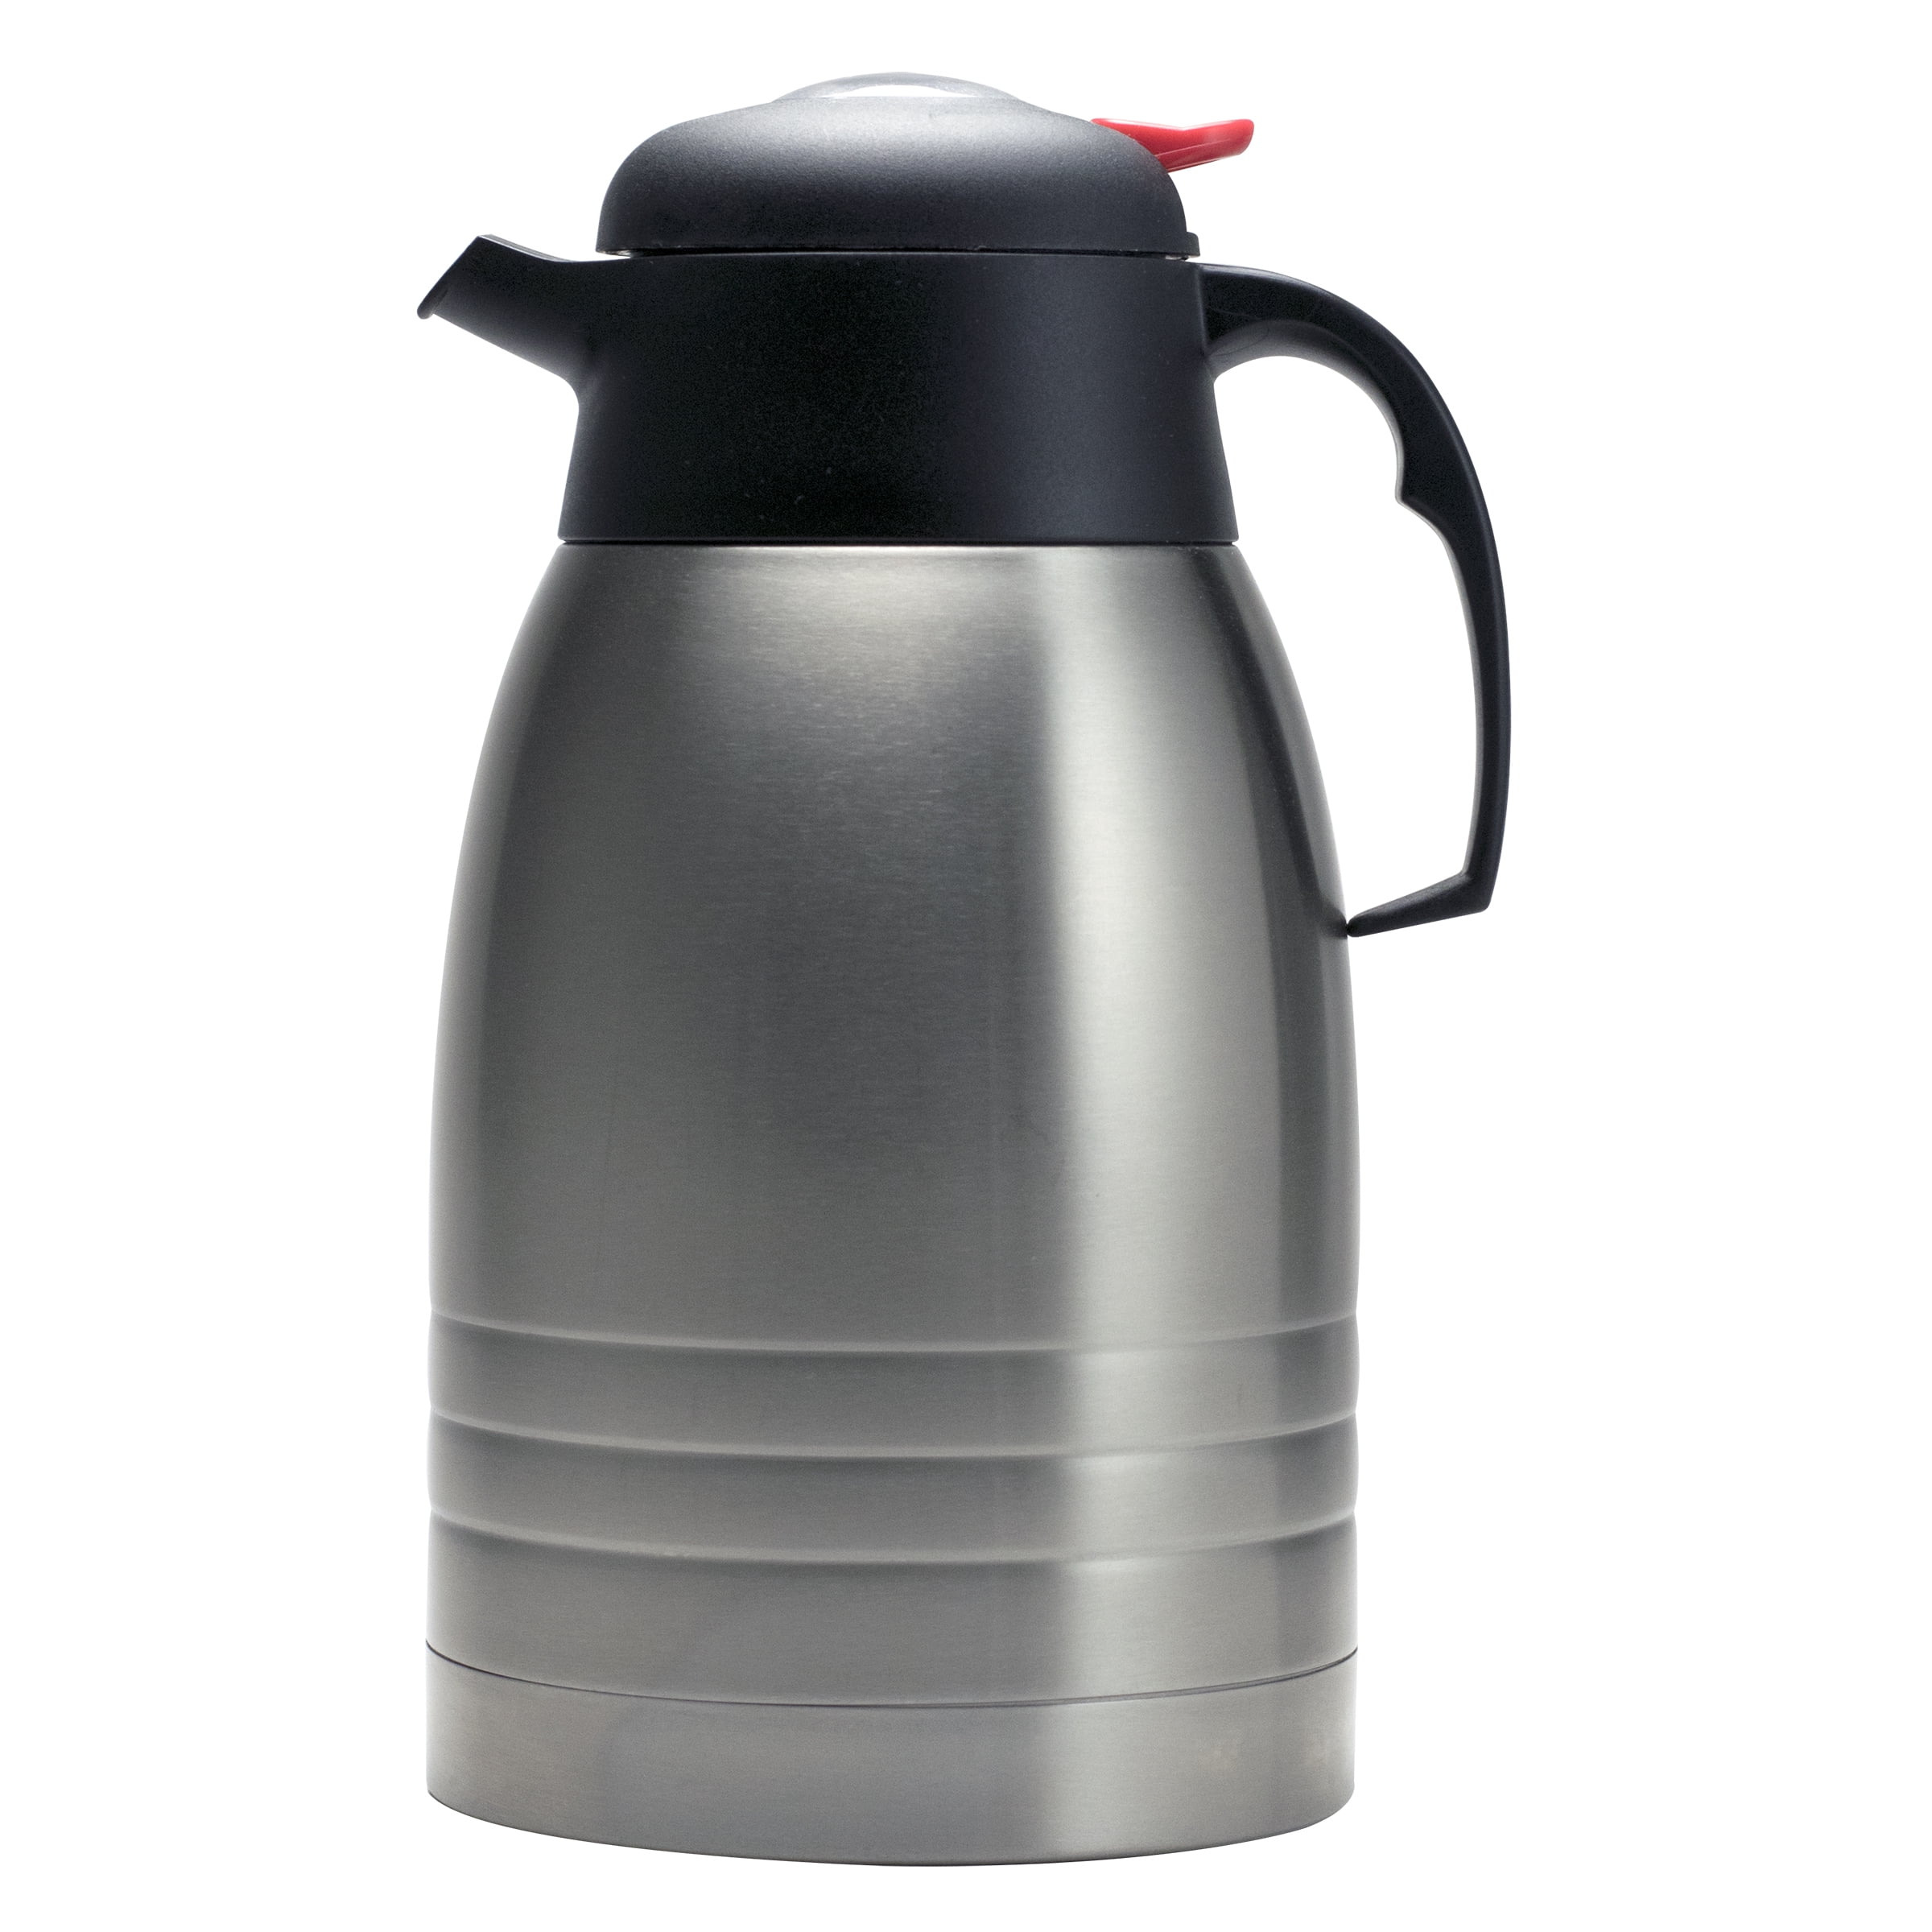 Vermida iSH09-M609529mn 68 Oz Thermal Coffee Carafe,2 Liter